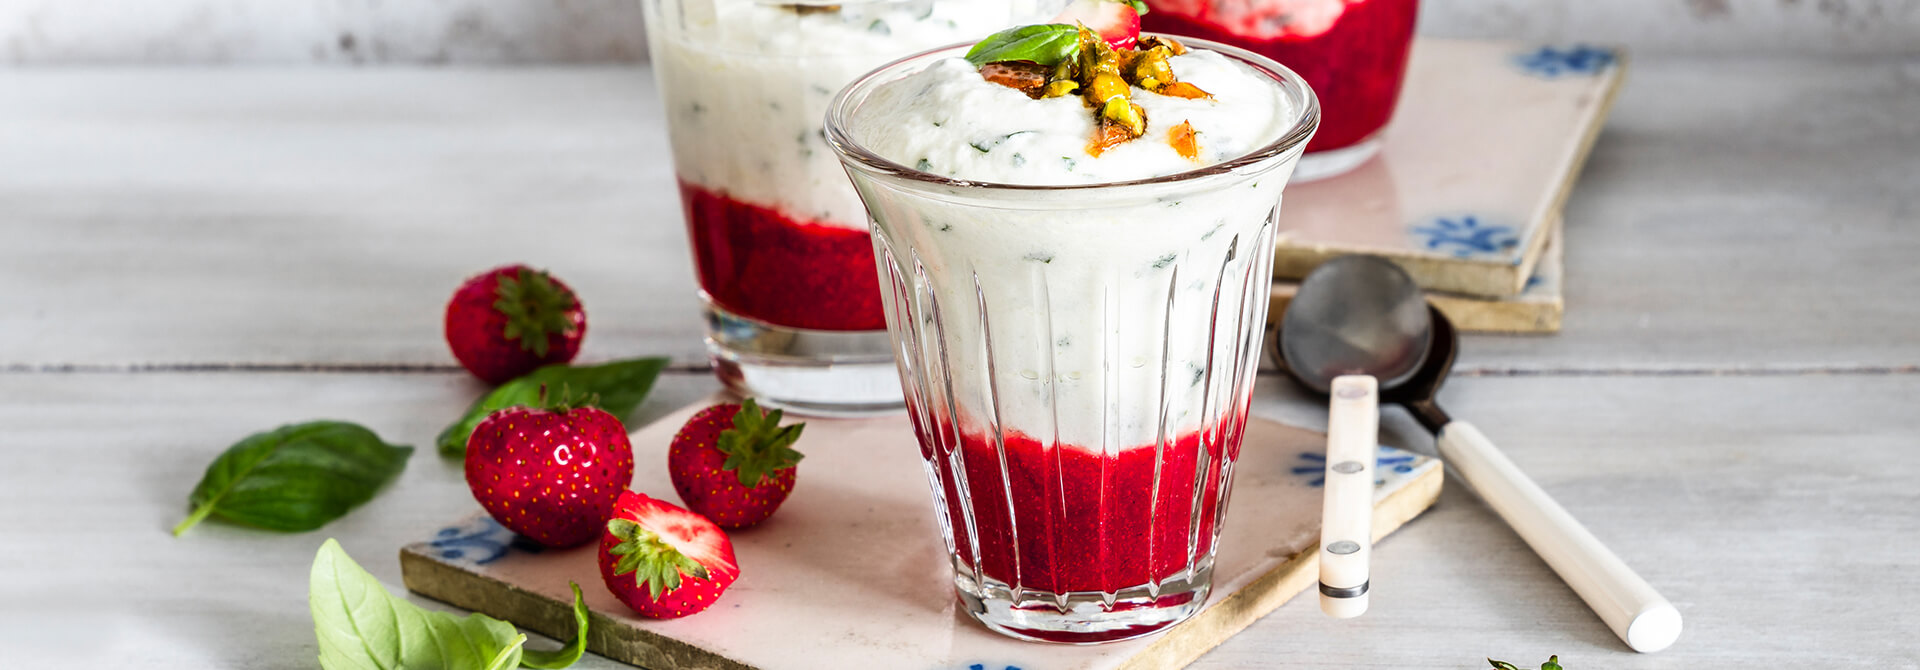 Basilikum-Joghurt-Schaum mit Erdbeersauce